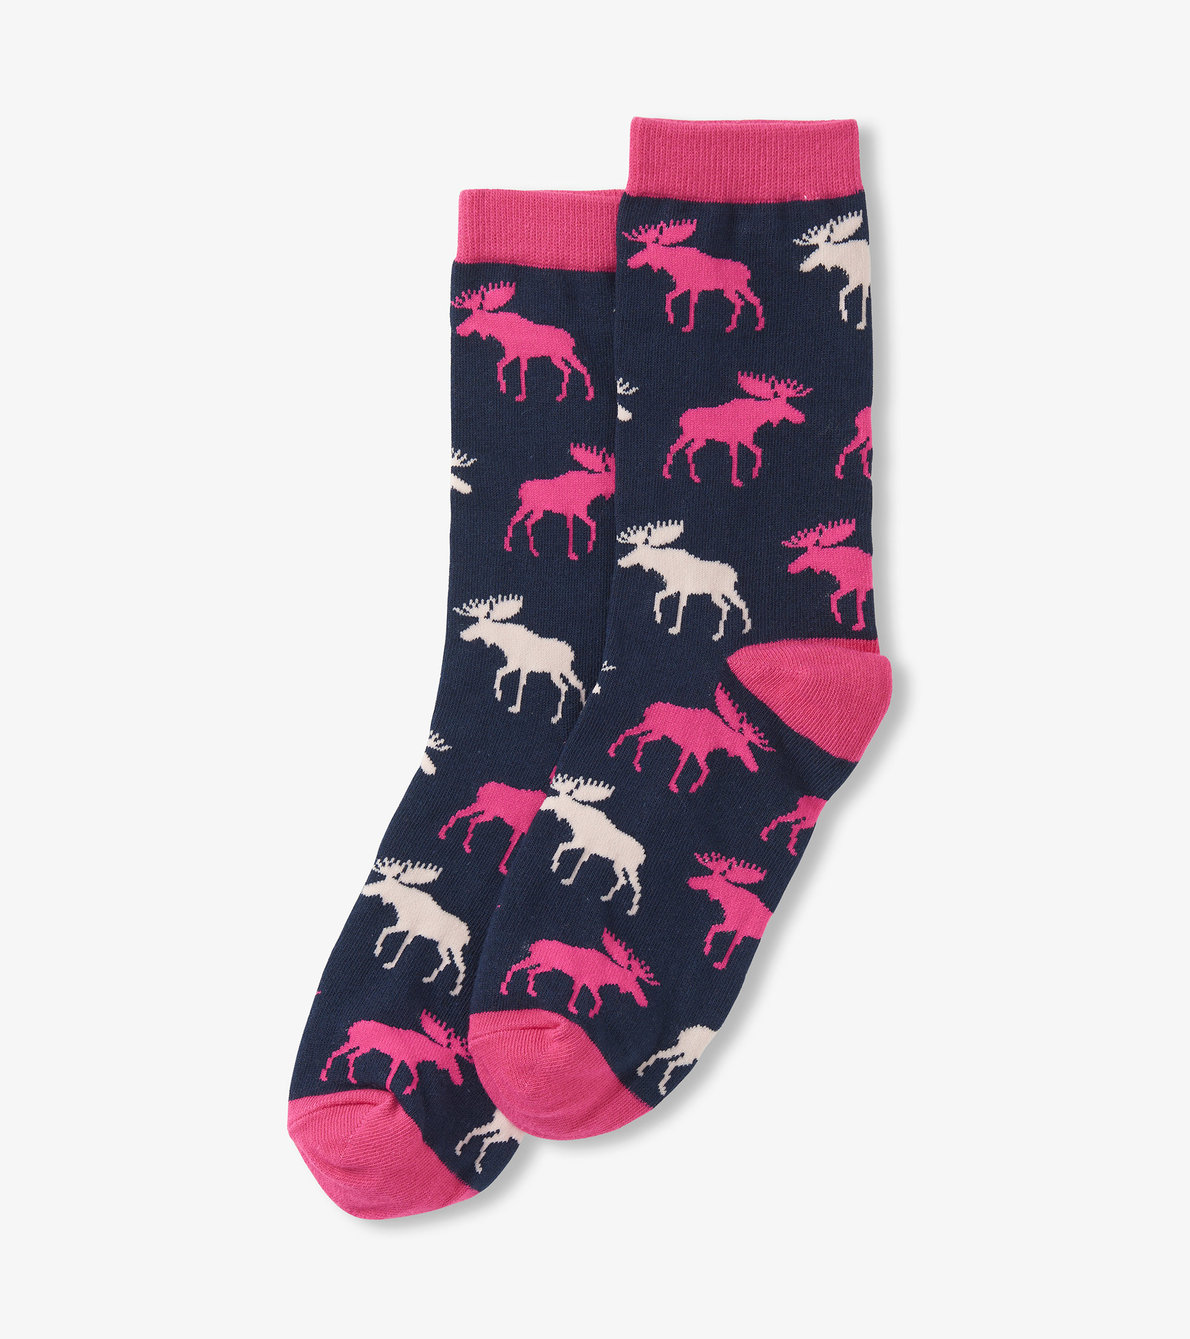 View larger image of Raspberry Moose Women's Crew Socks